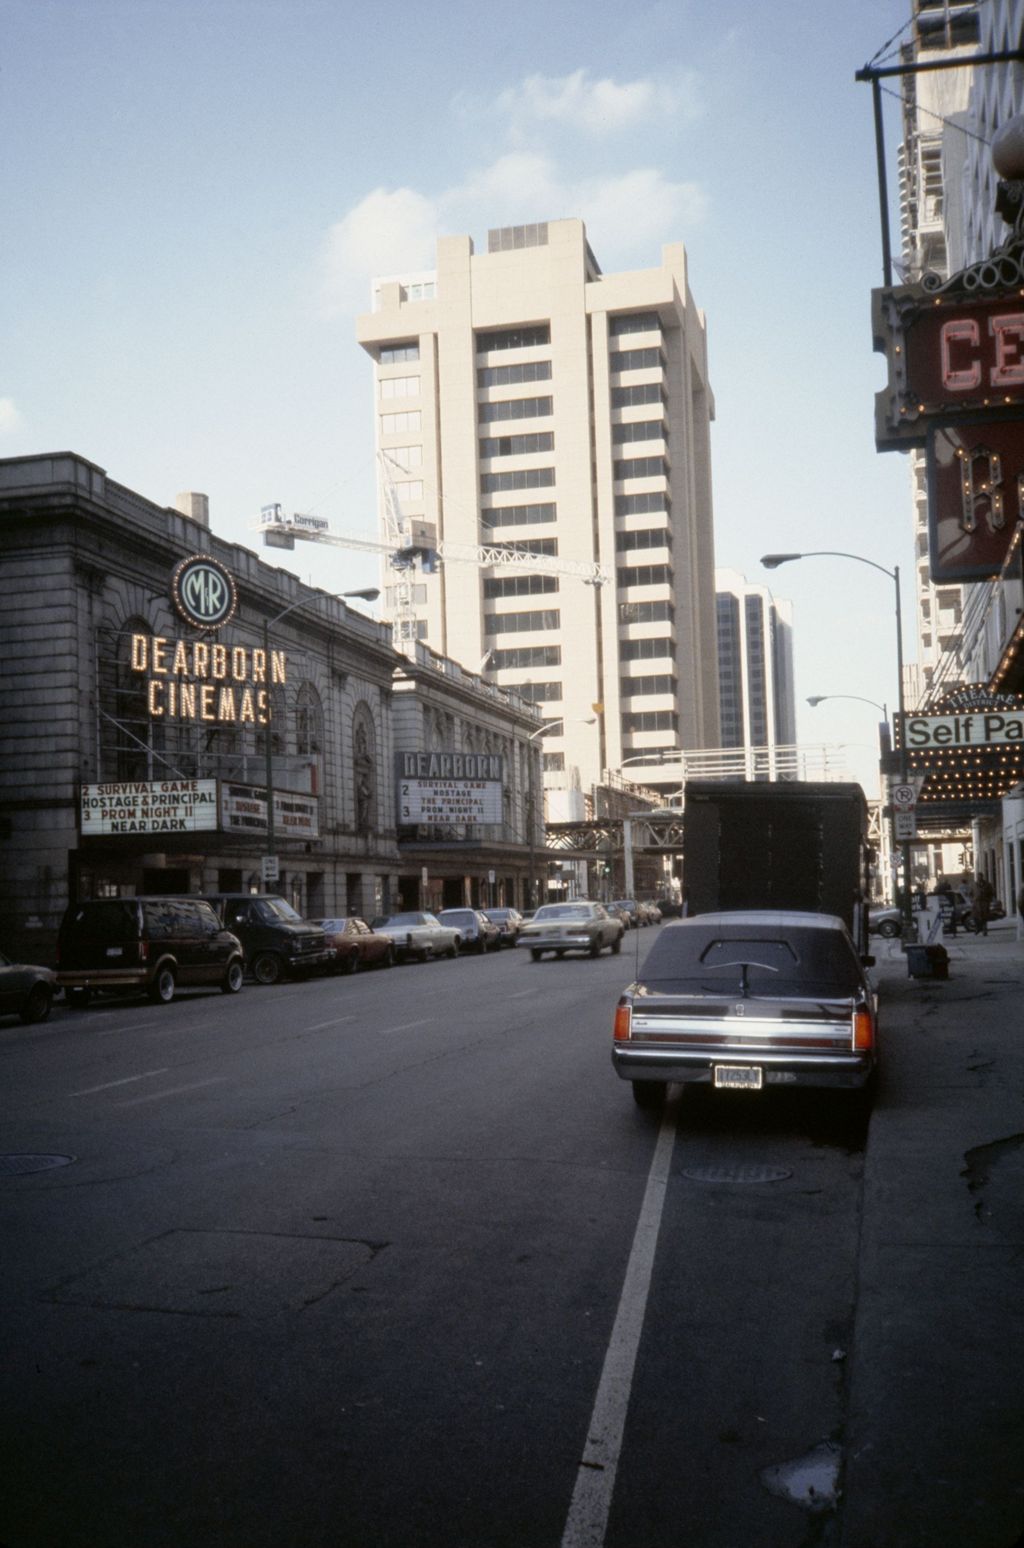 Dearborn Street and Dearborn Cinemas